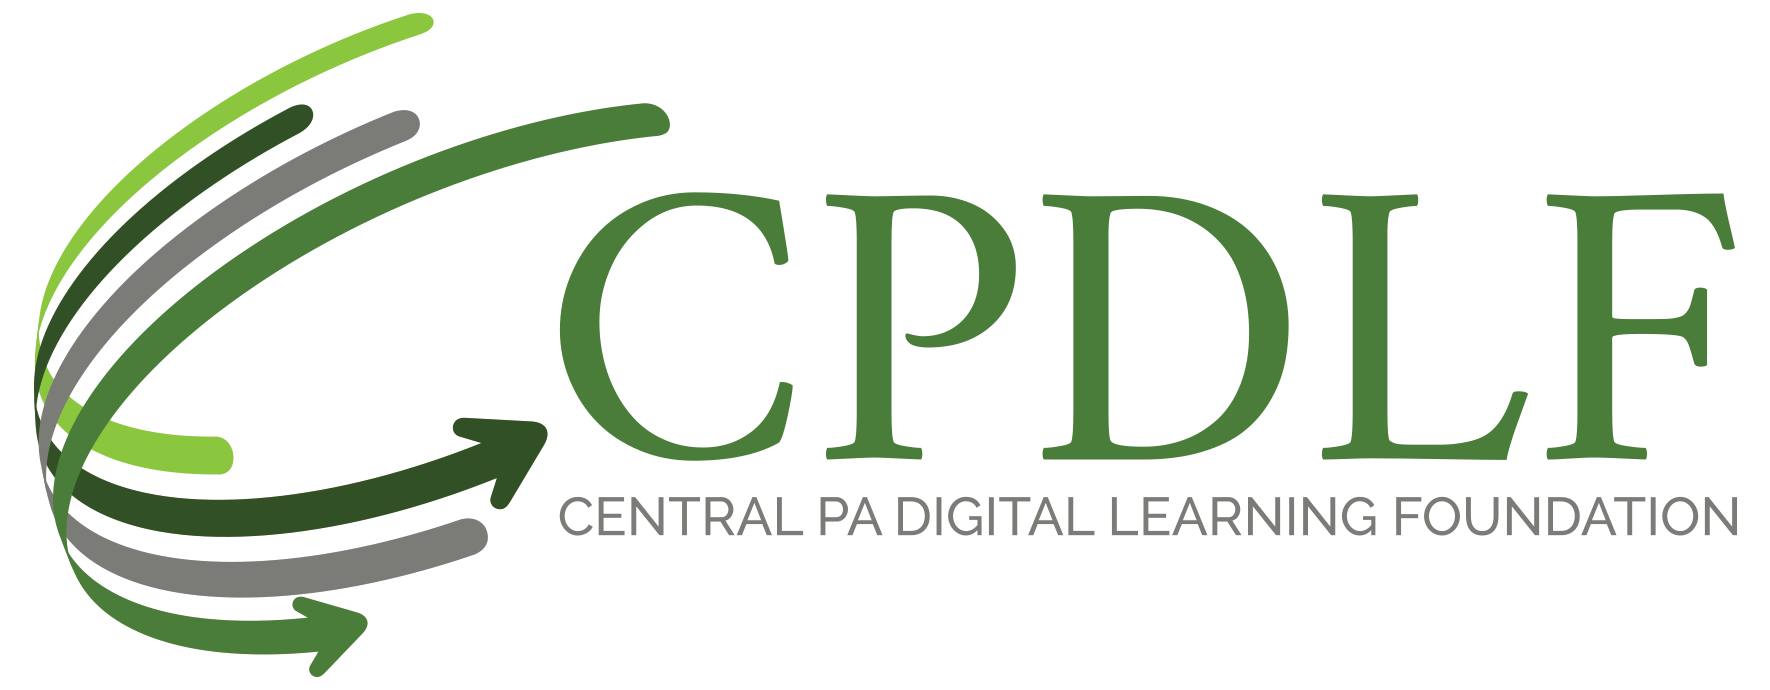 CPDLF Logo